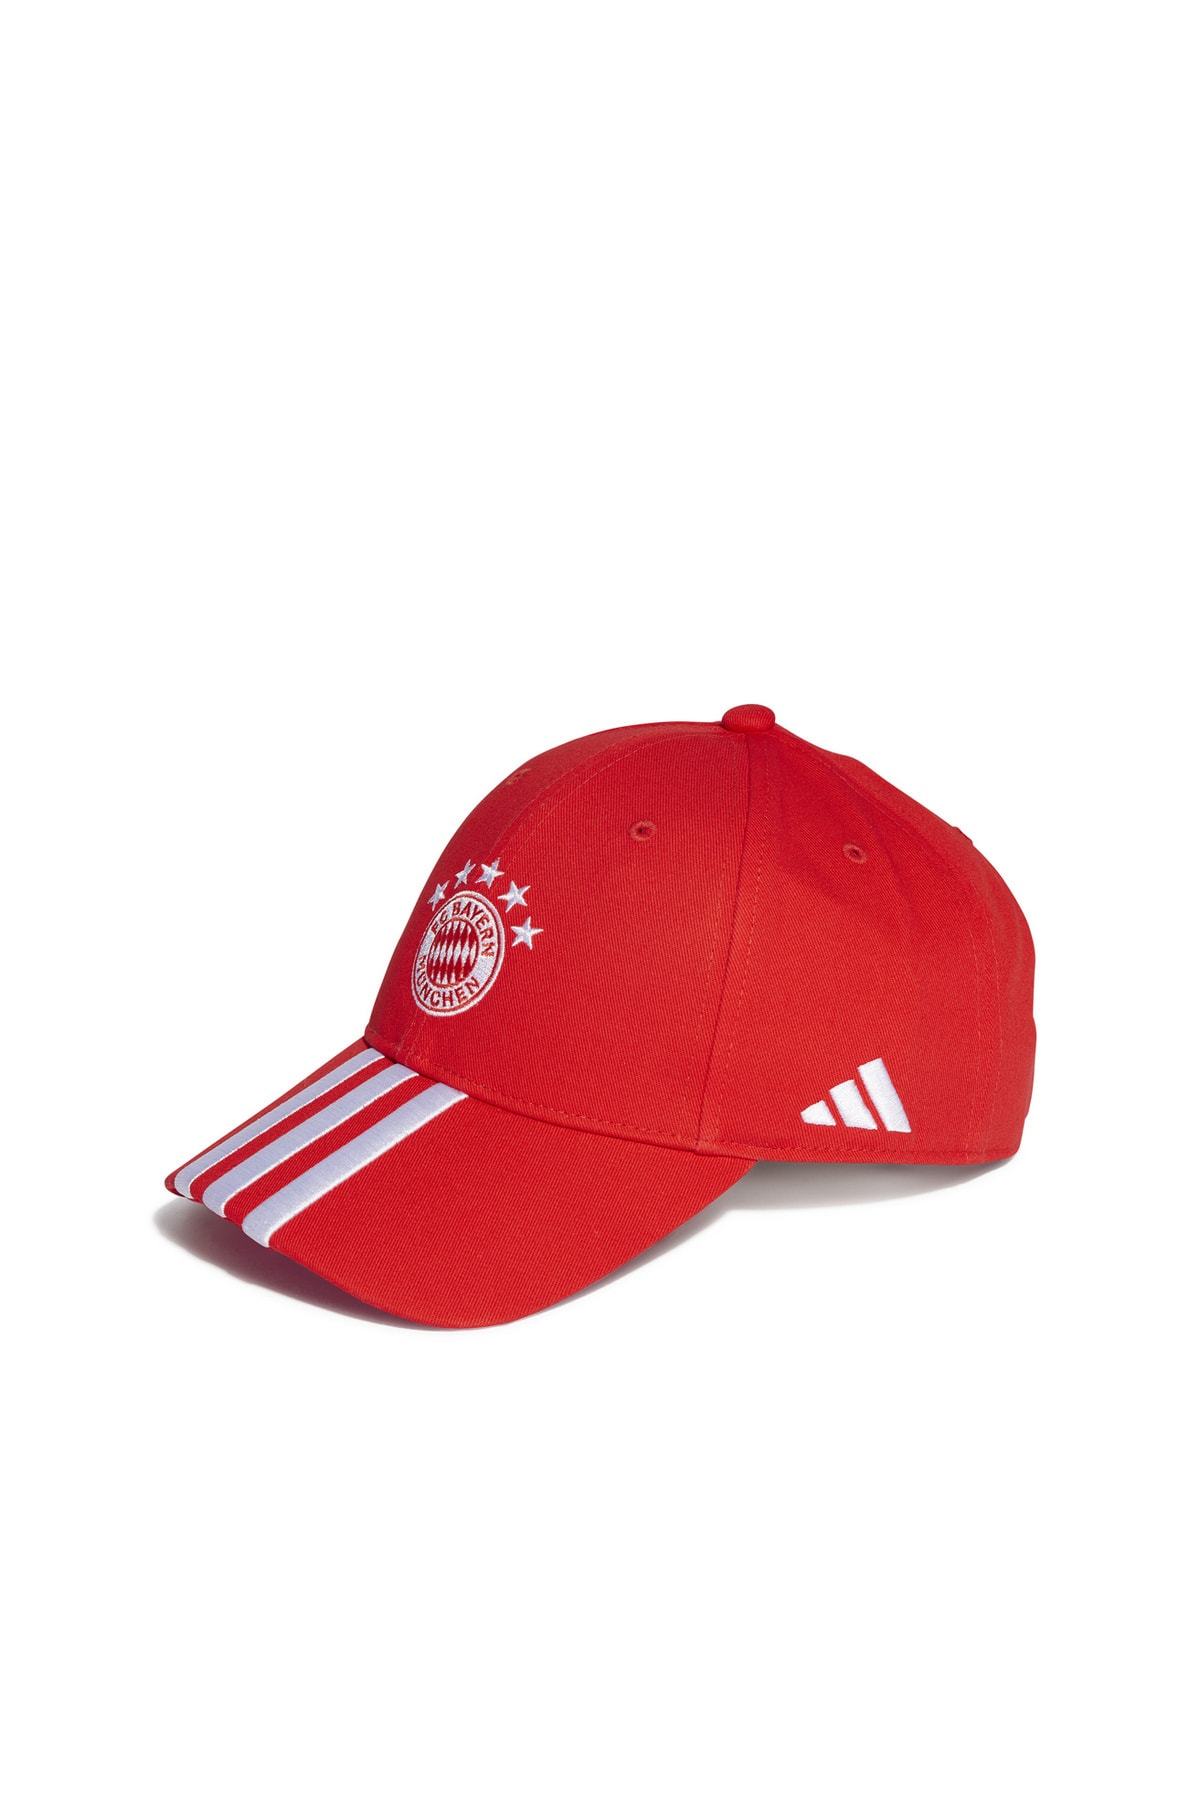 adidas کلاه، استاندارد، قرمز